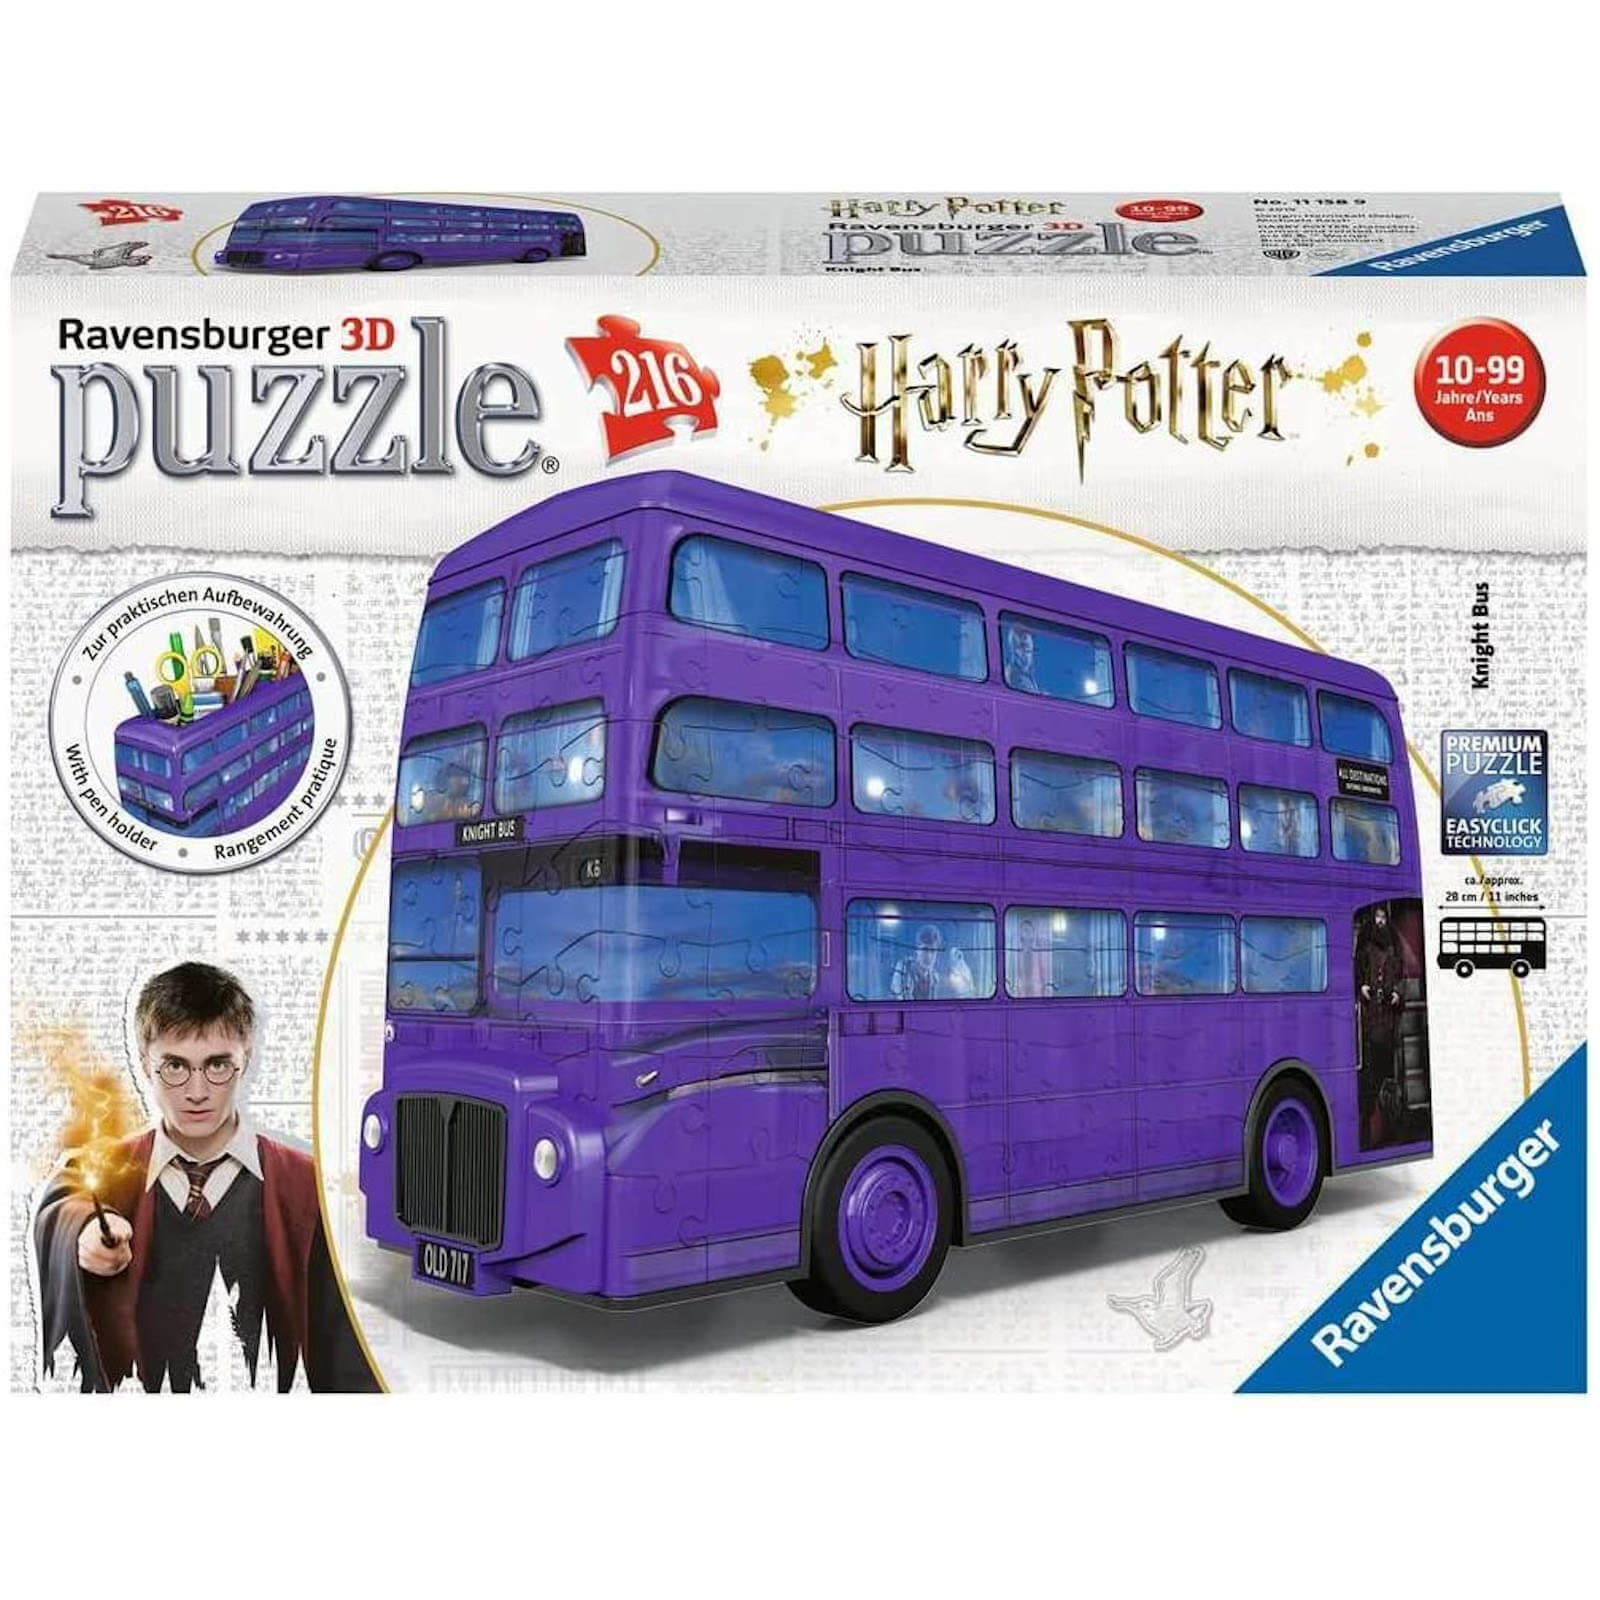 Ravensburger Harry Potter Knight Bus 3D Jigsaw Puzzle (216 Pieces)